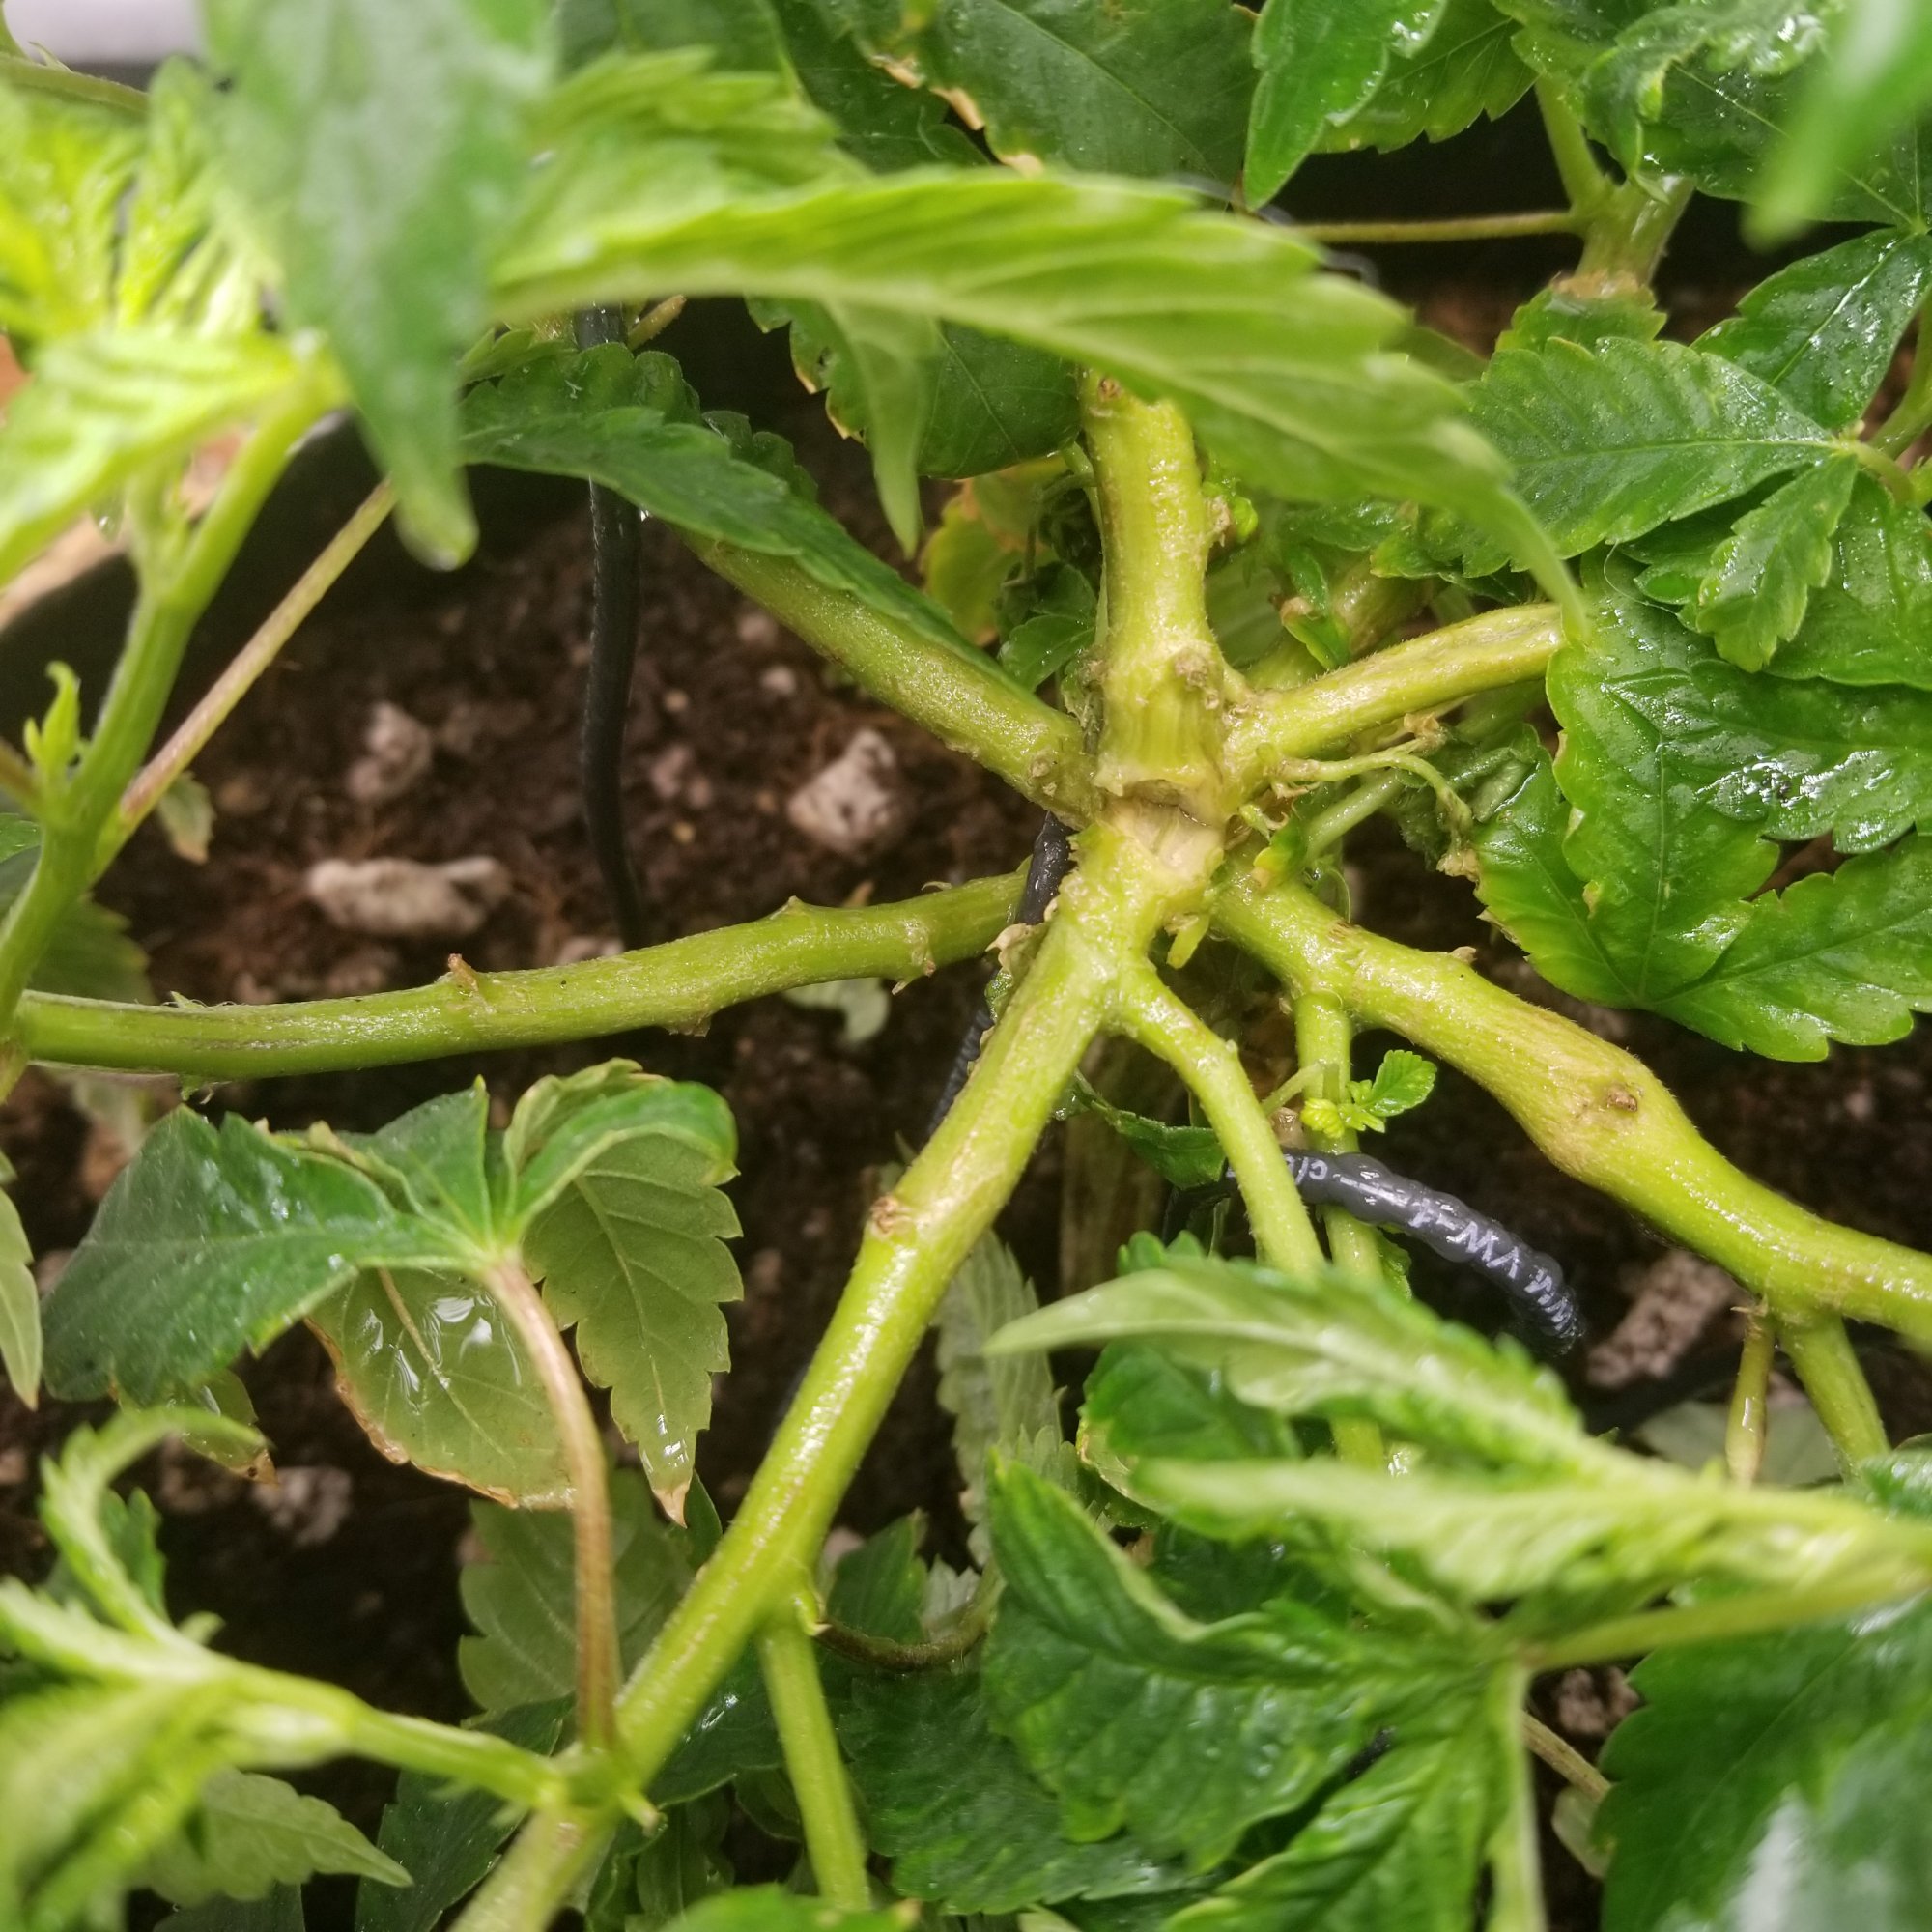 Help split stem straight down middle 2